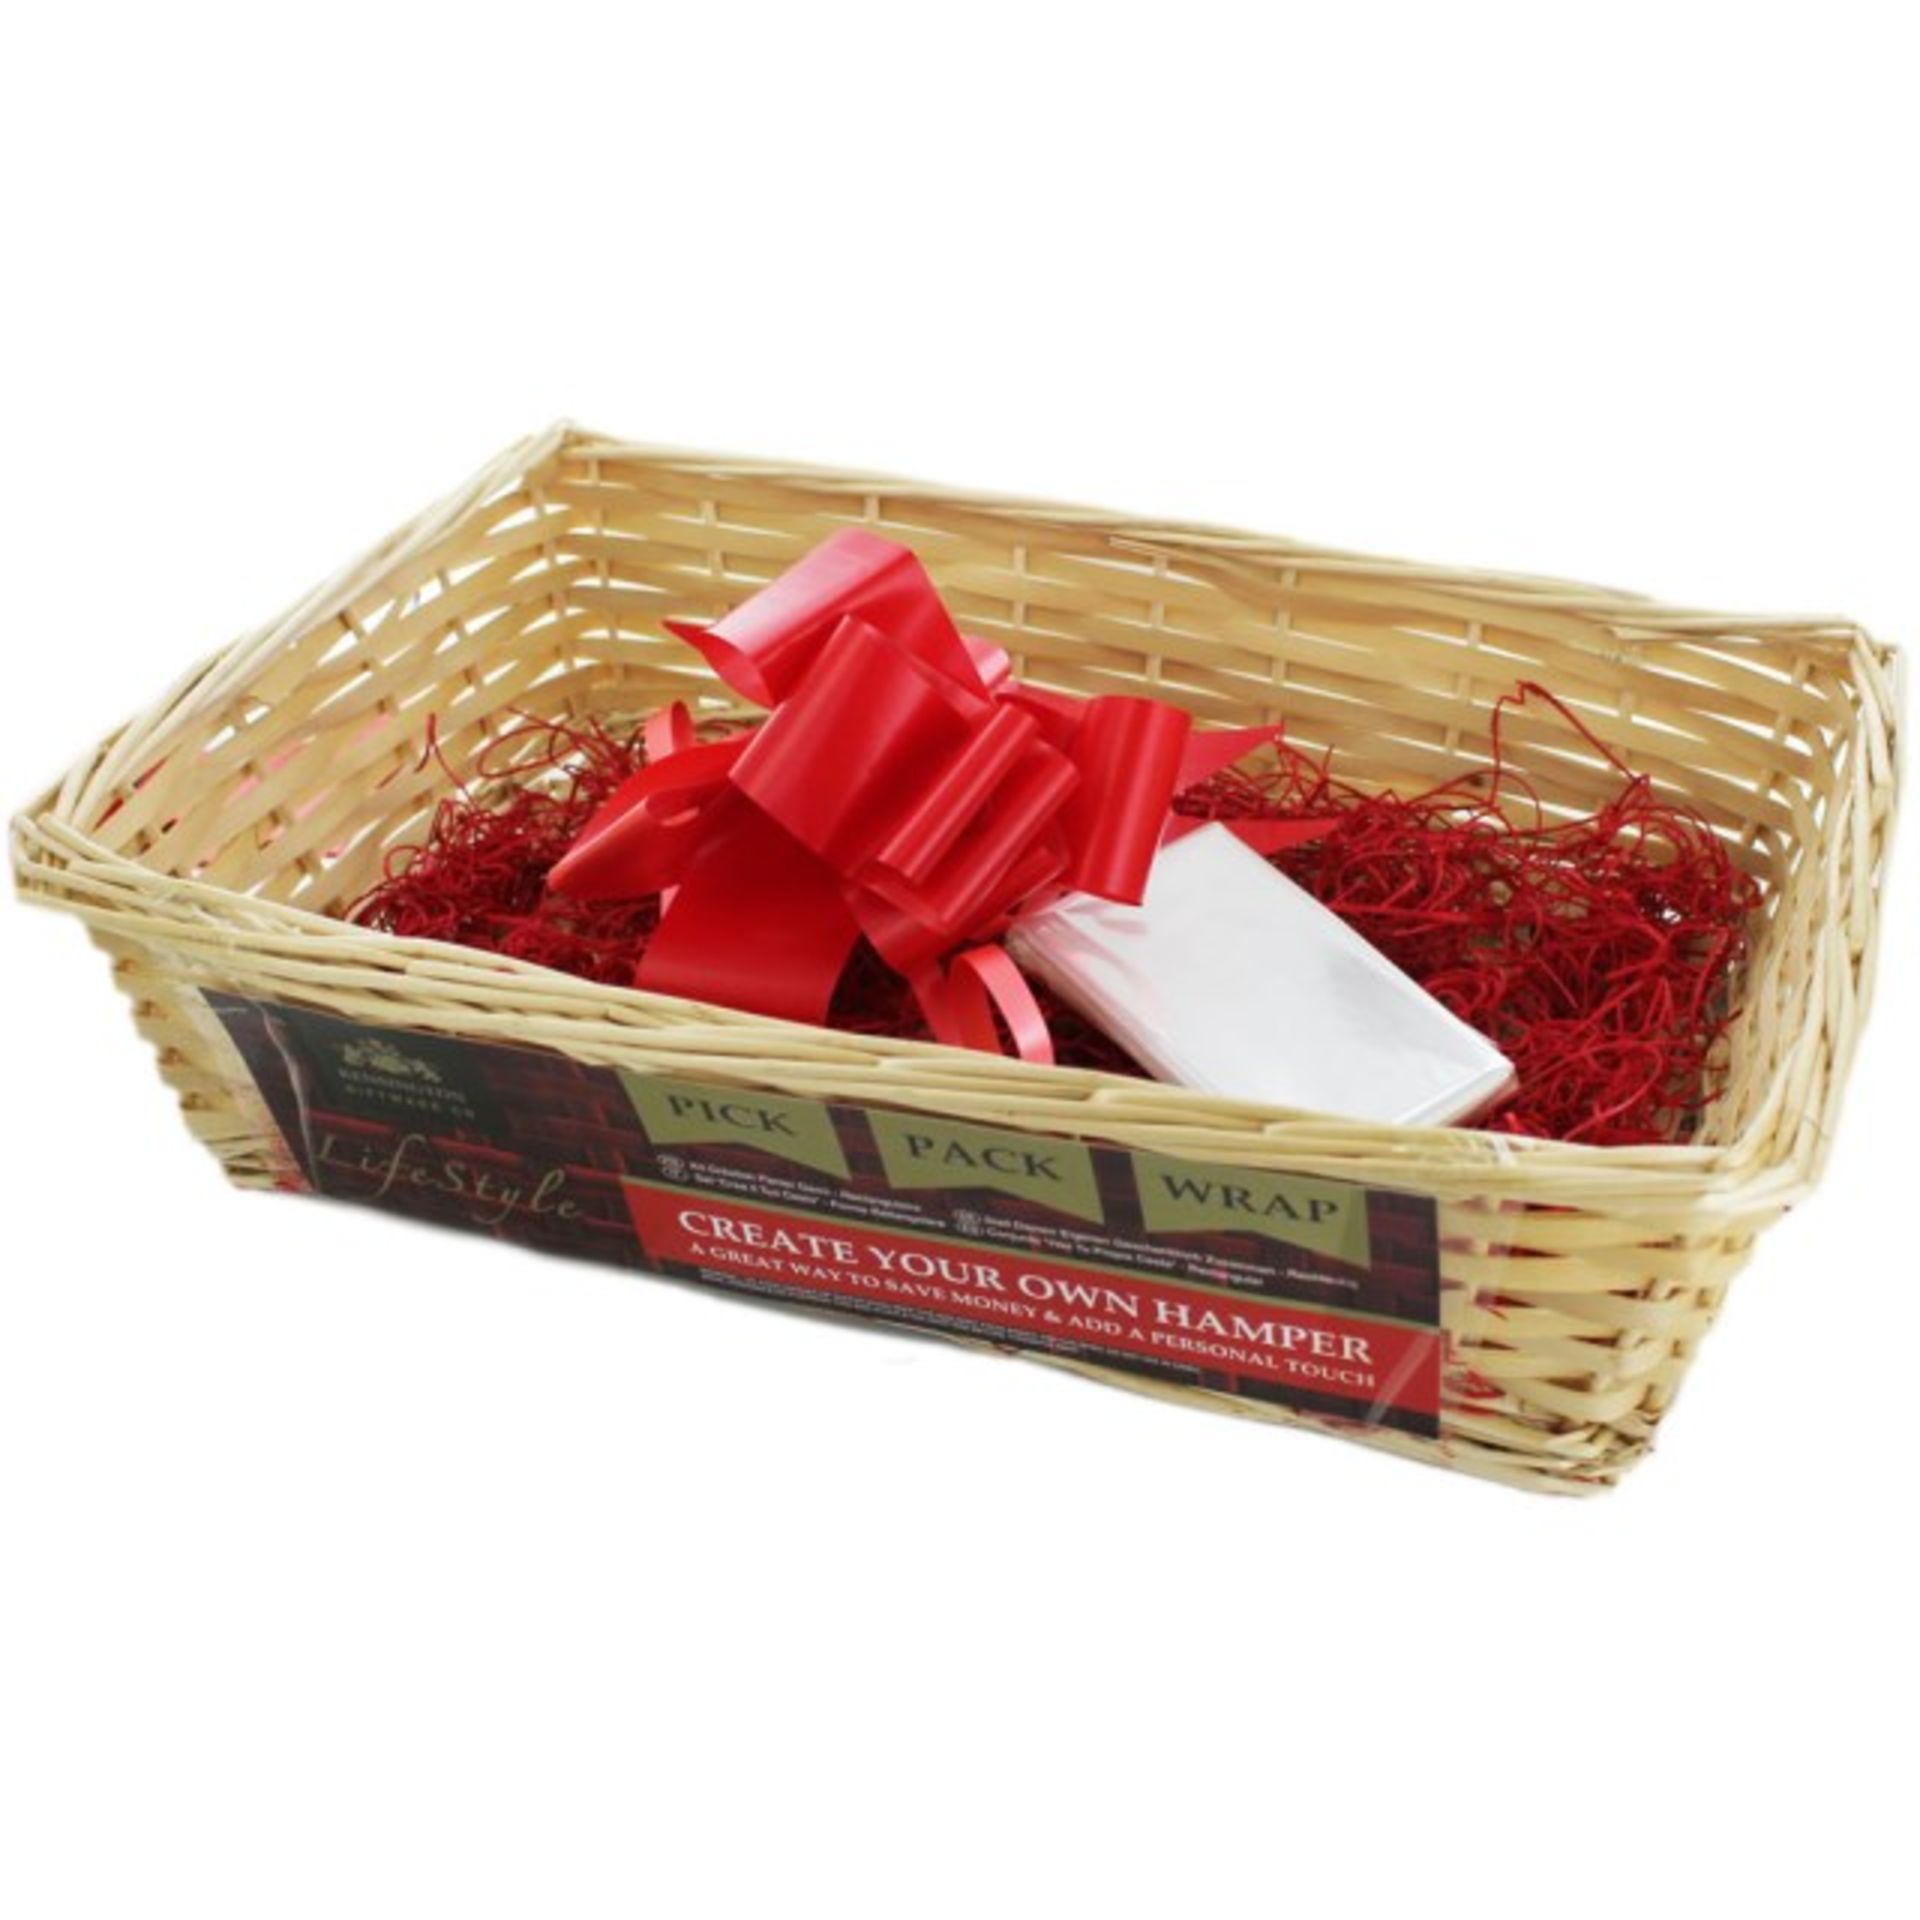 V Brand New Hamper Kit - Create your own Hamper includes Basket, Ribbon,Wood wool packaging,